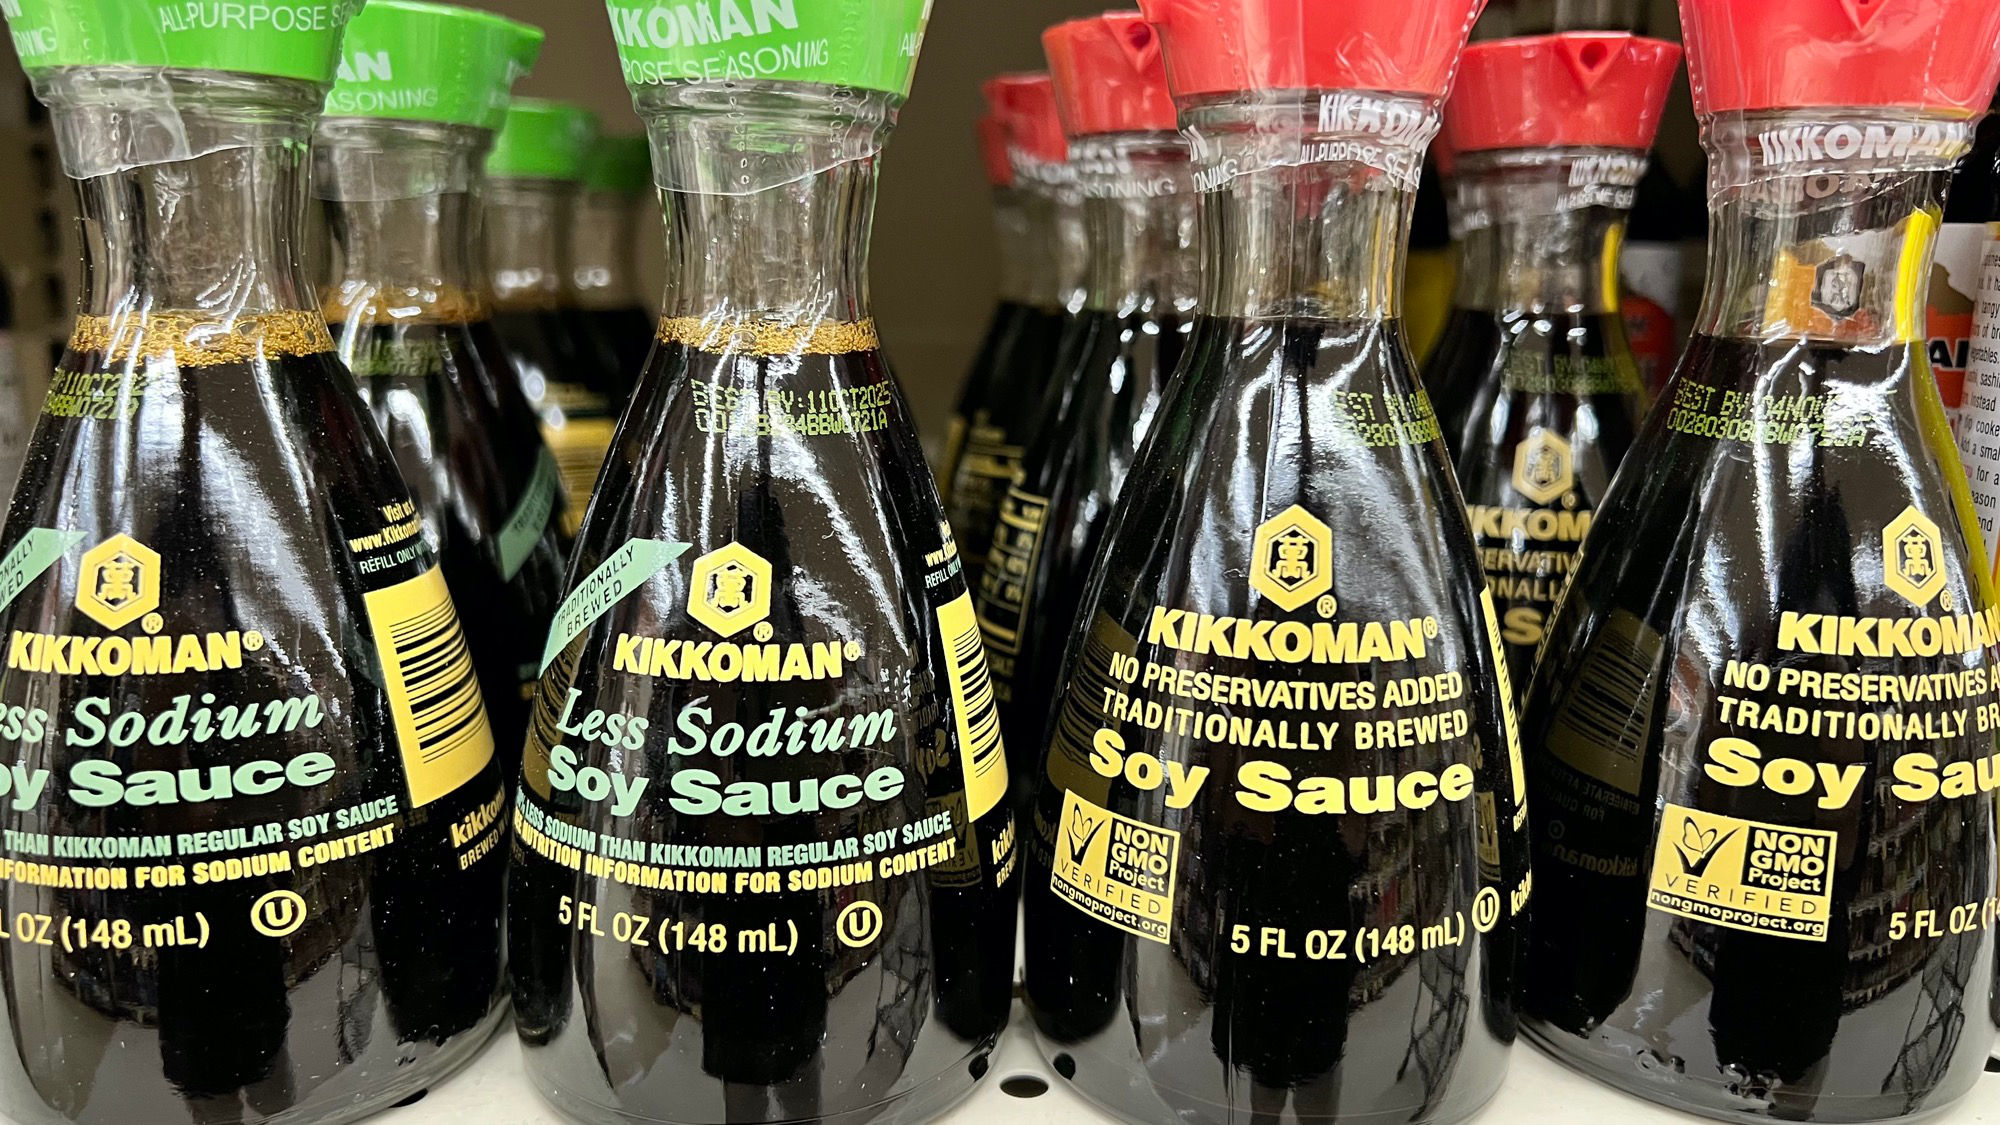 Kiokkoman Soy Sauce Bottles